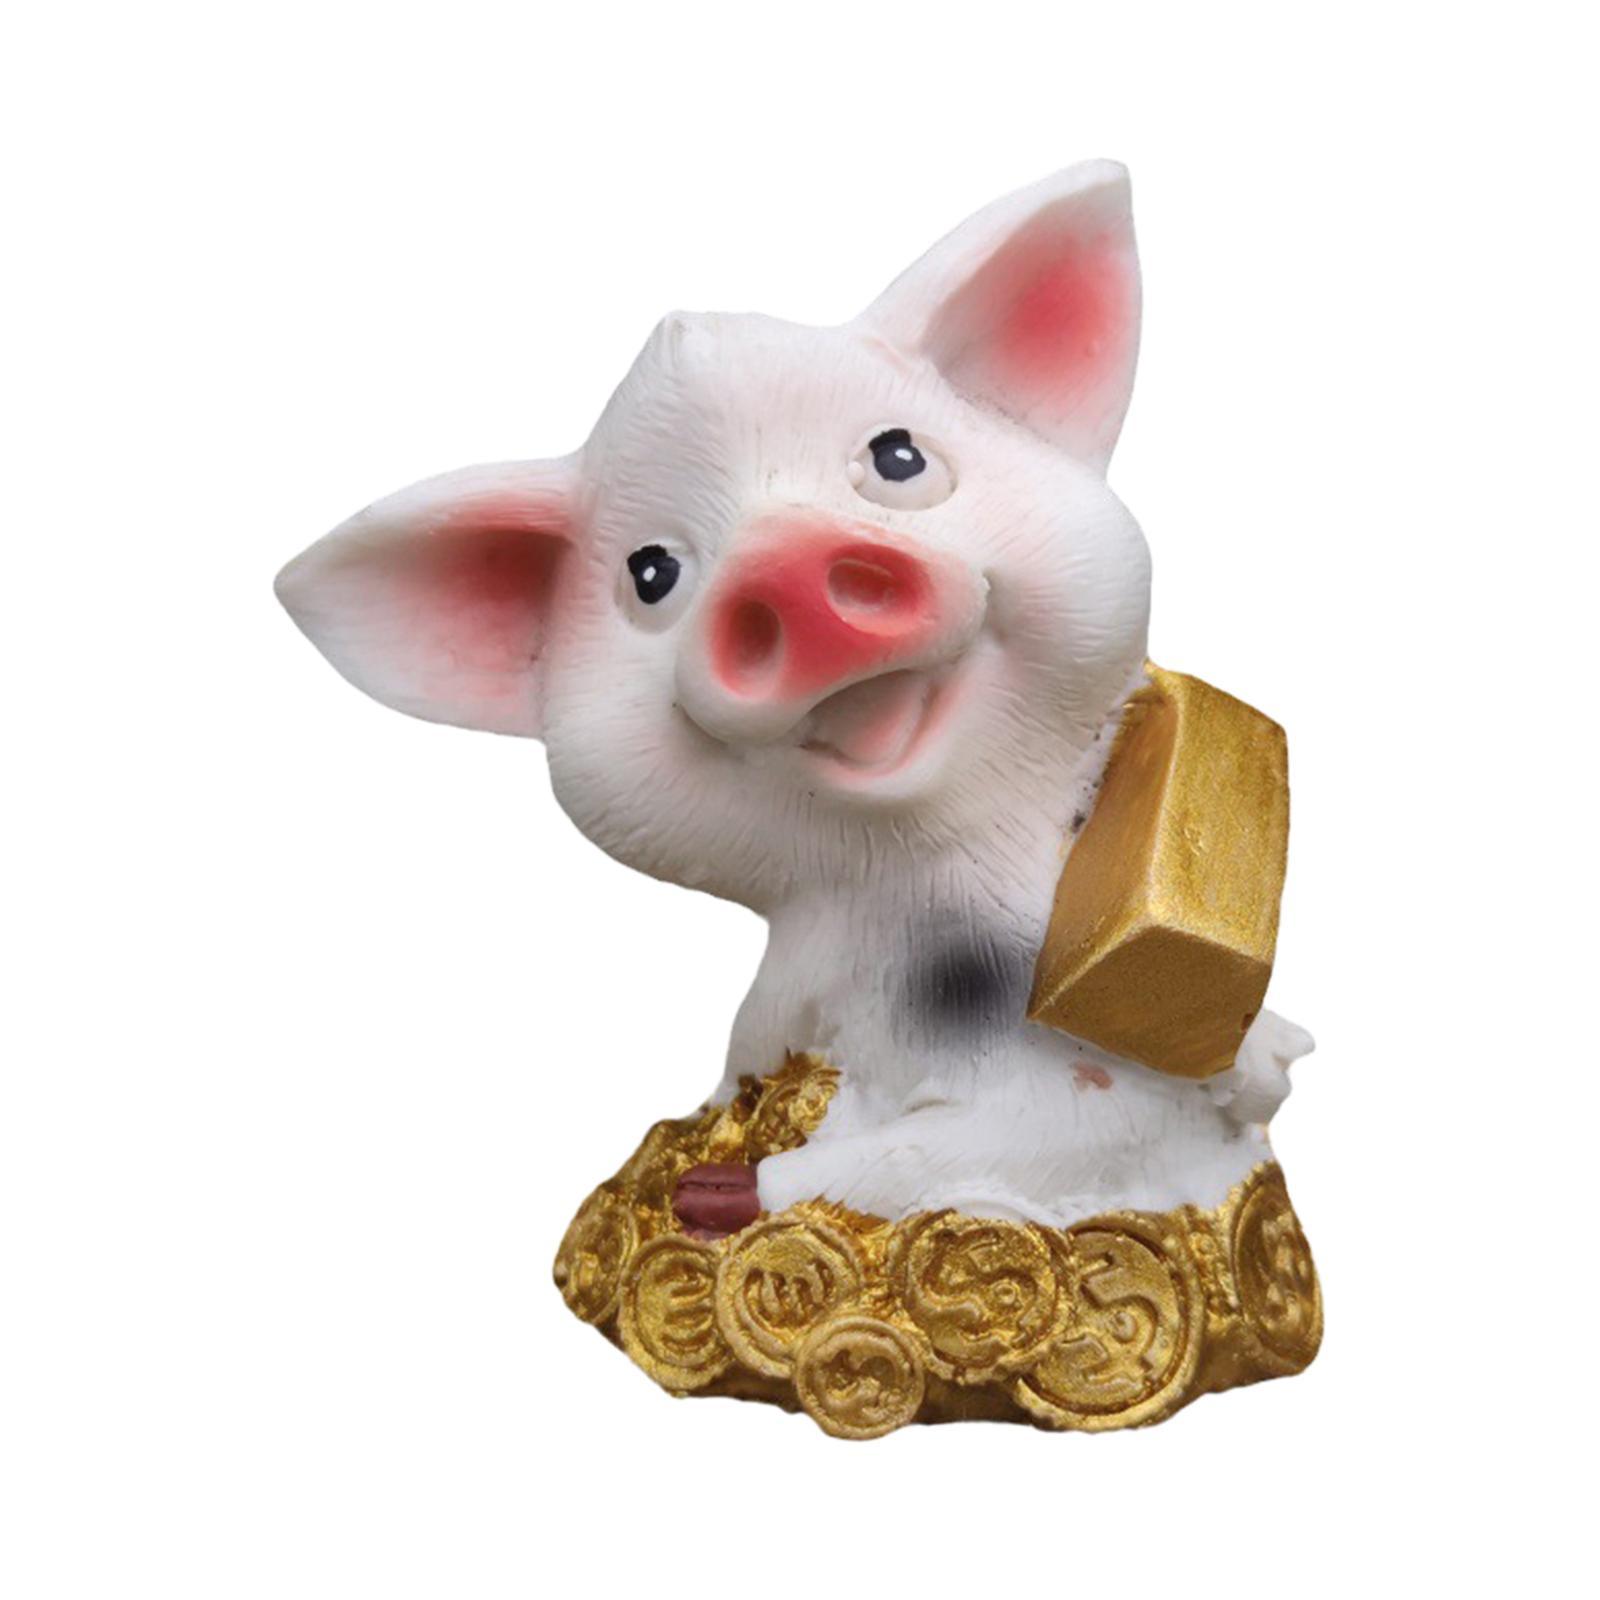 Pig Ornament Decorative Animal Statue, Home Garden Decor, 4.7×3.7×5.8cm Resin Pig Statue Cake Decoration for Room Window Desk